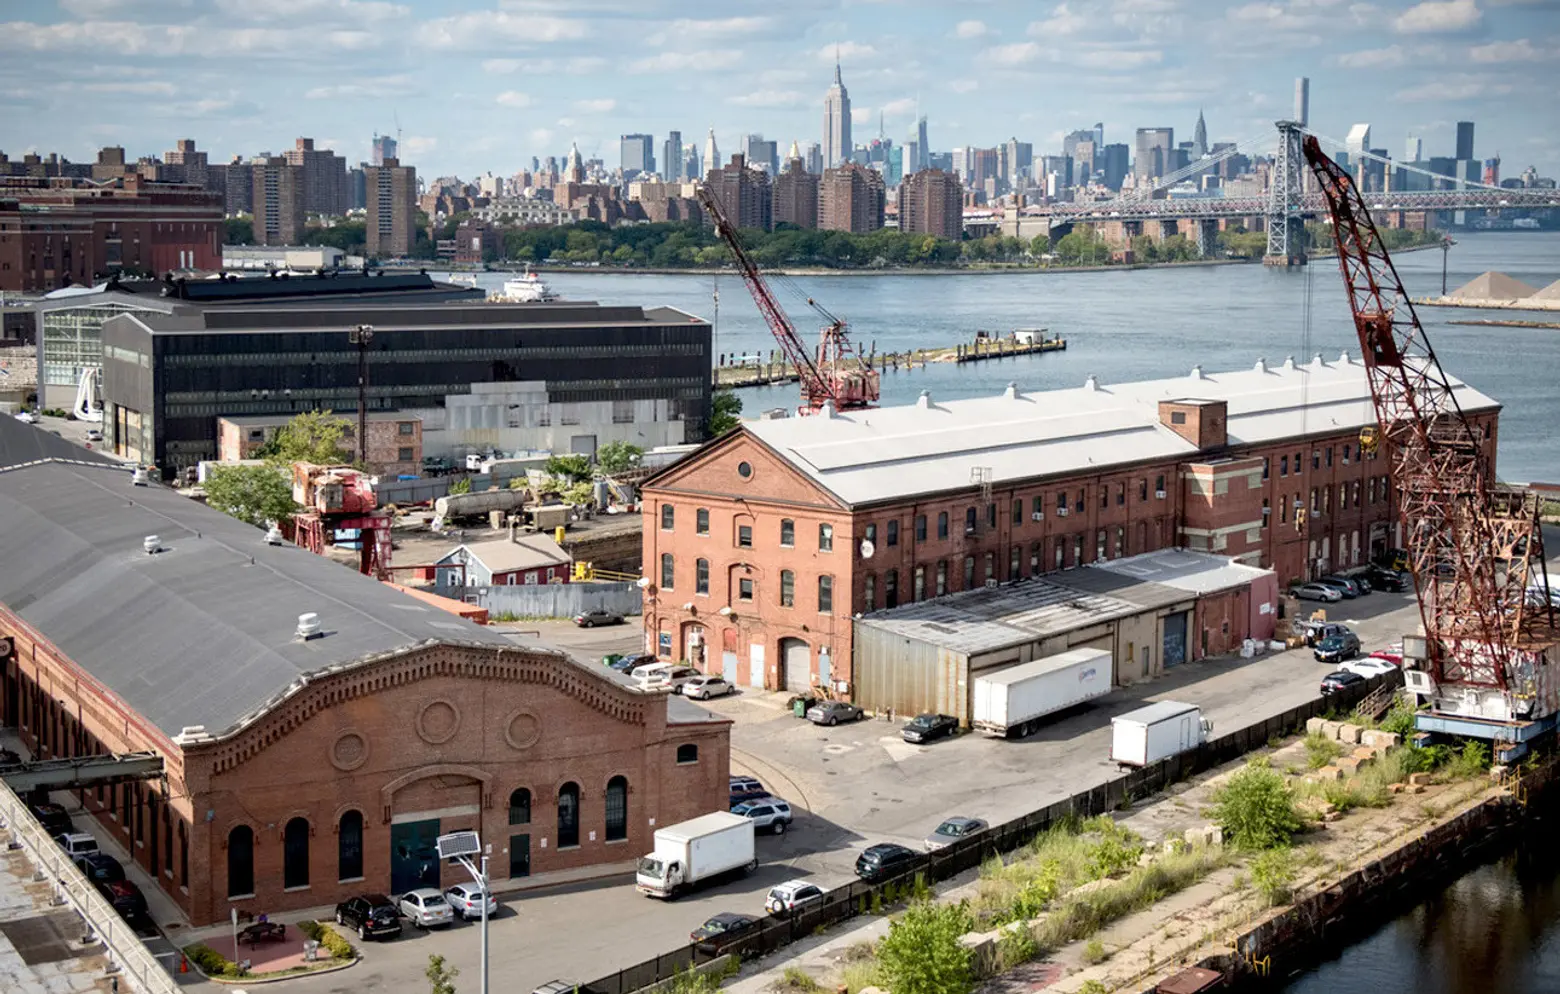 Brooklyn Navy Yard, Navy Yard redevelopment, Building 77, Russ & Daughters